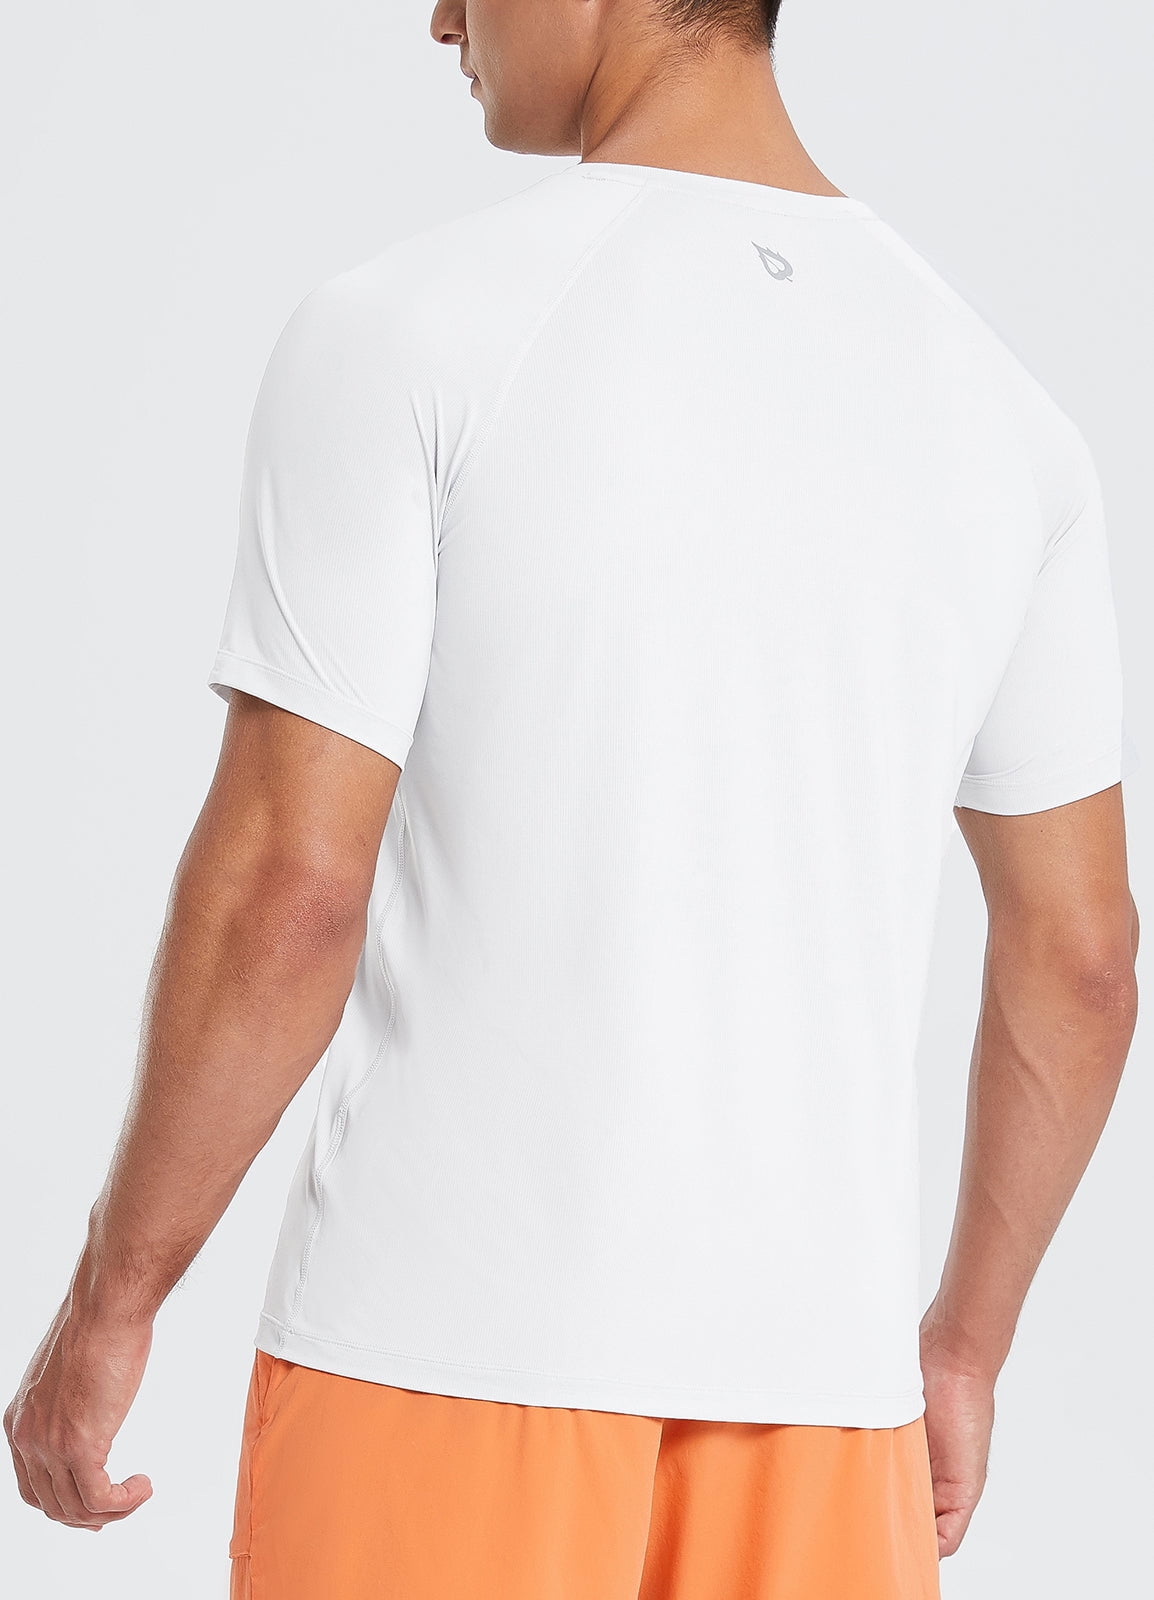 BALEAF Mens Quick Dry Workout Running Athletic Short Sleeve T-Shirt Outdoor Shirt 